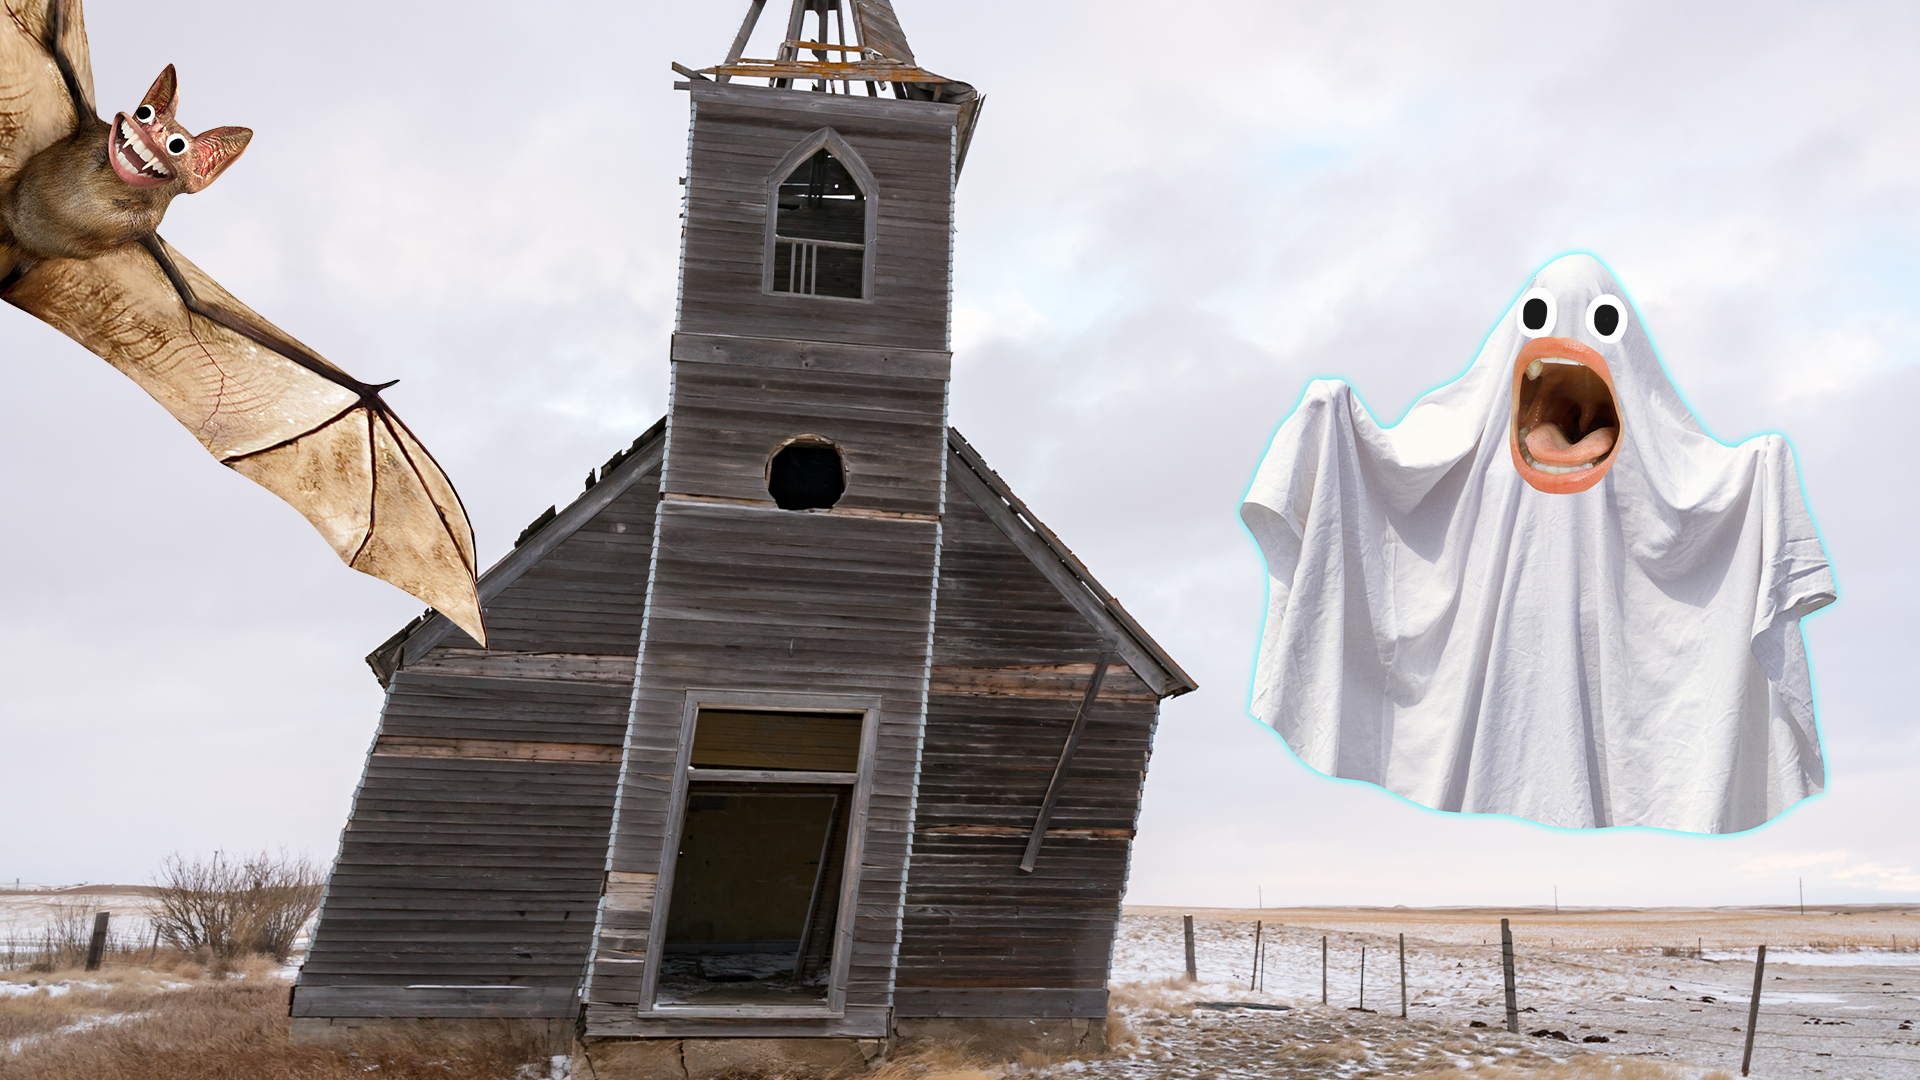 Creepy church with Beano ghost and bat